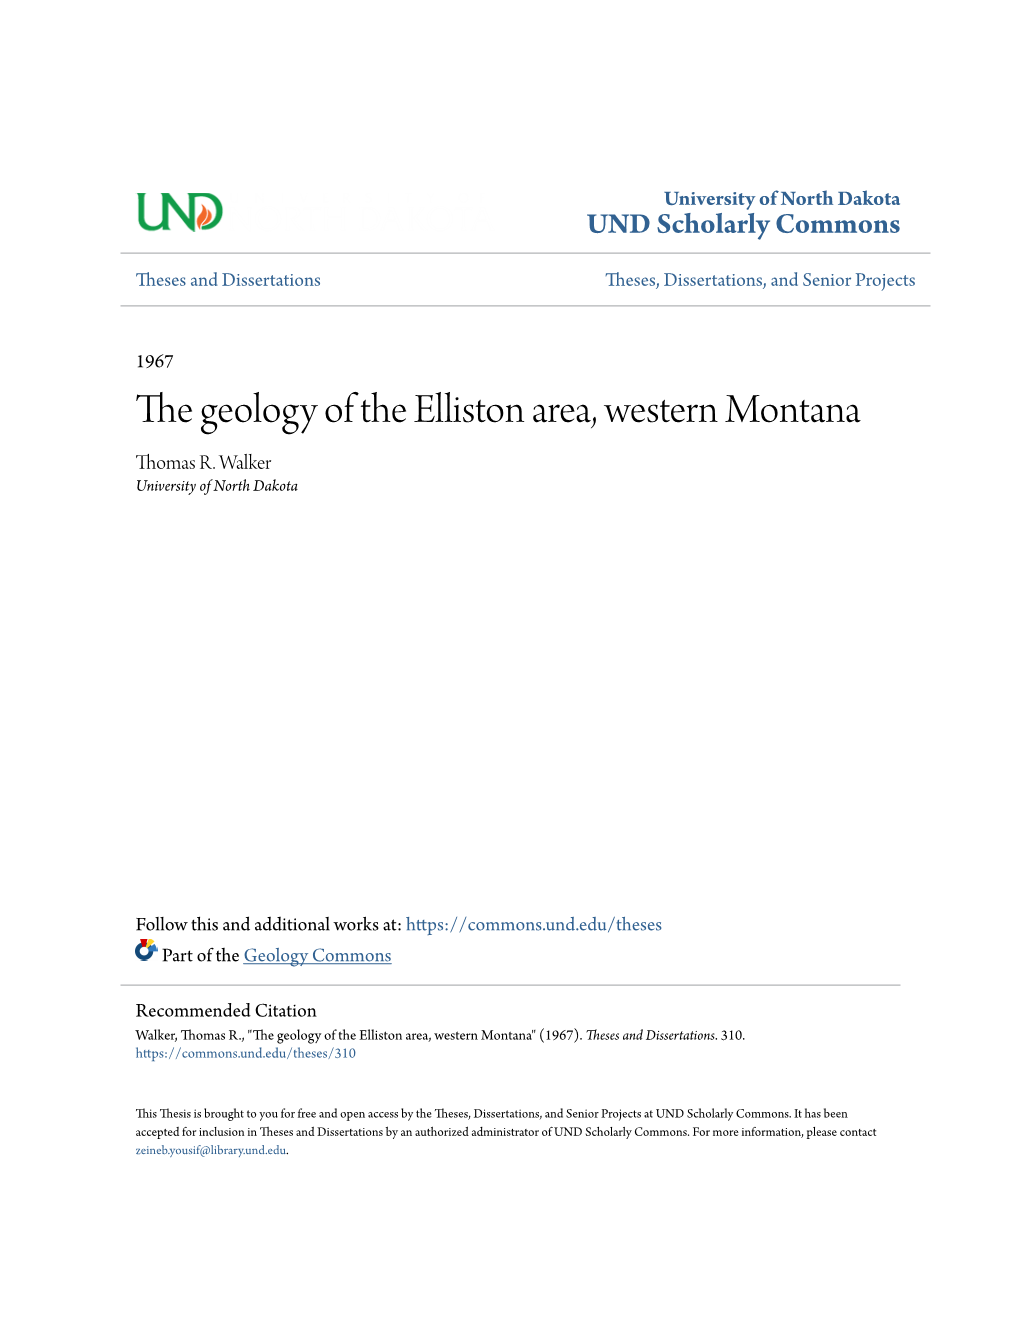 The Geology of the Elliston Area, Western Montana Thomas R